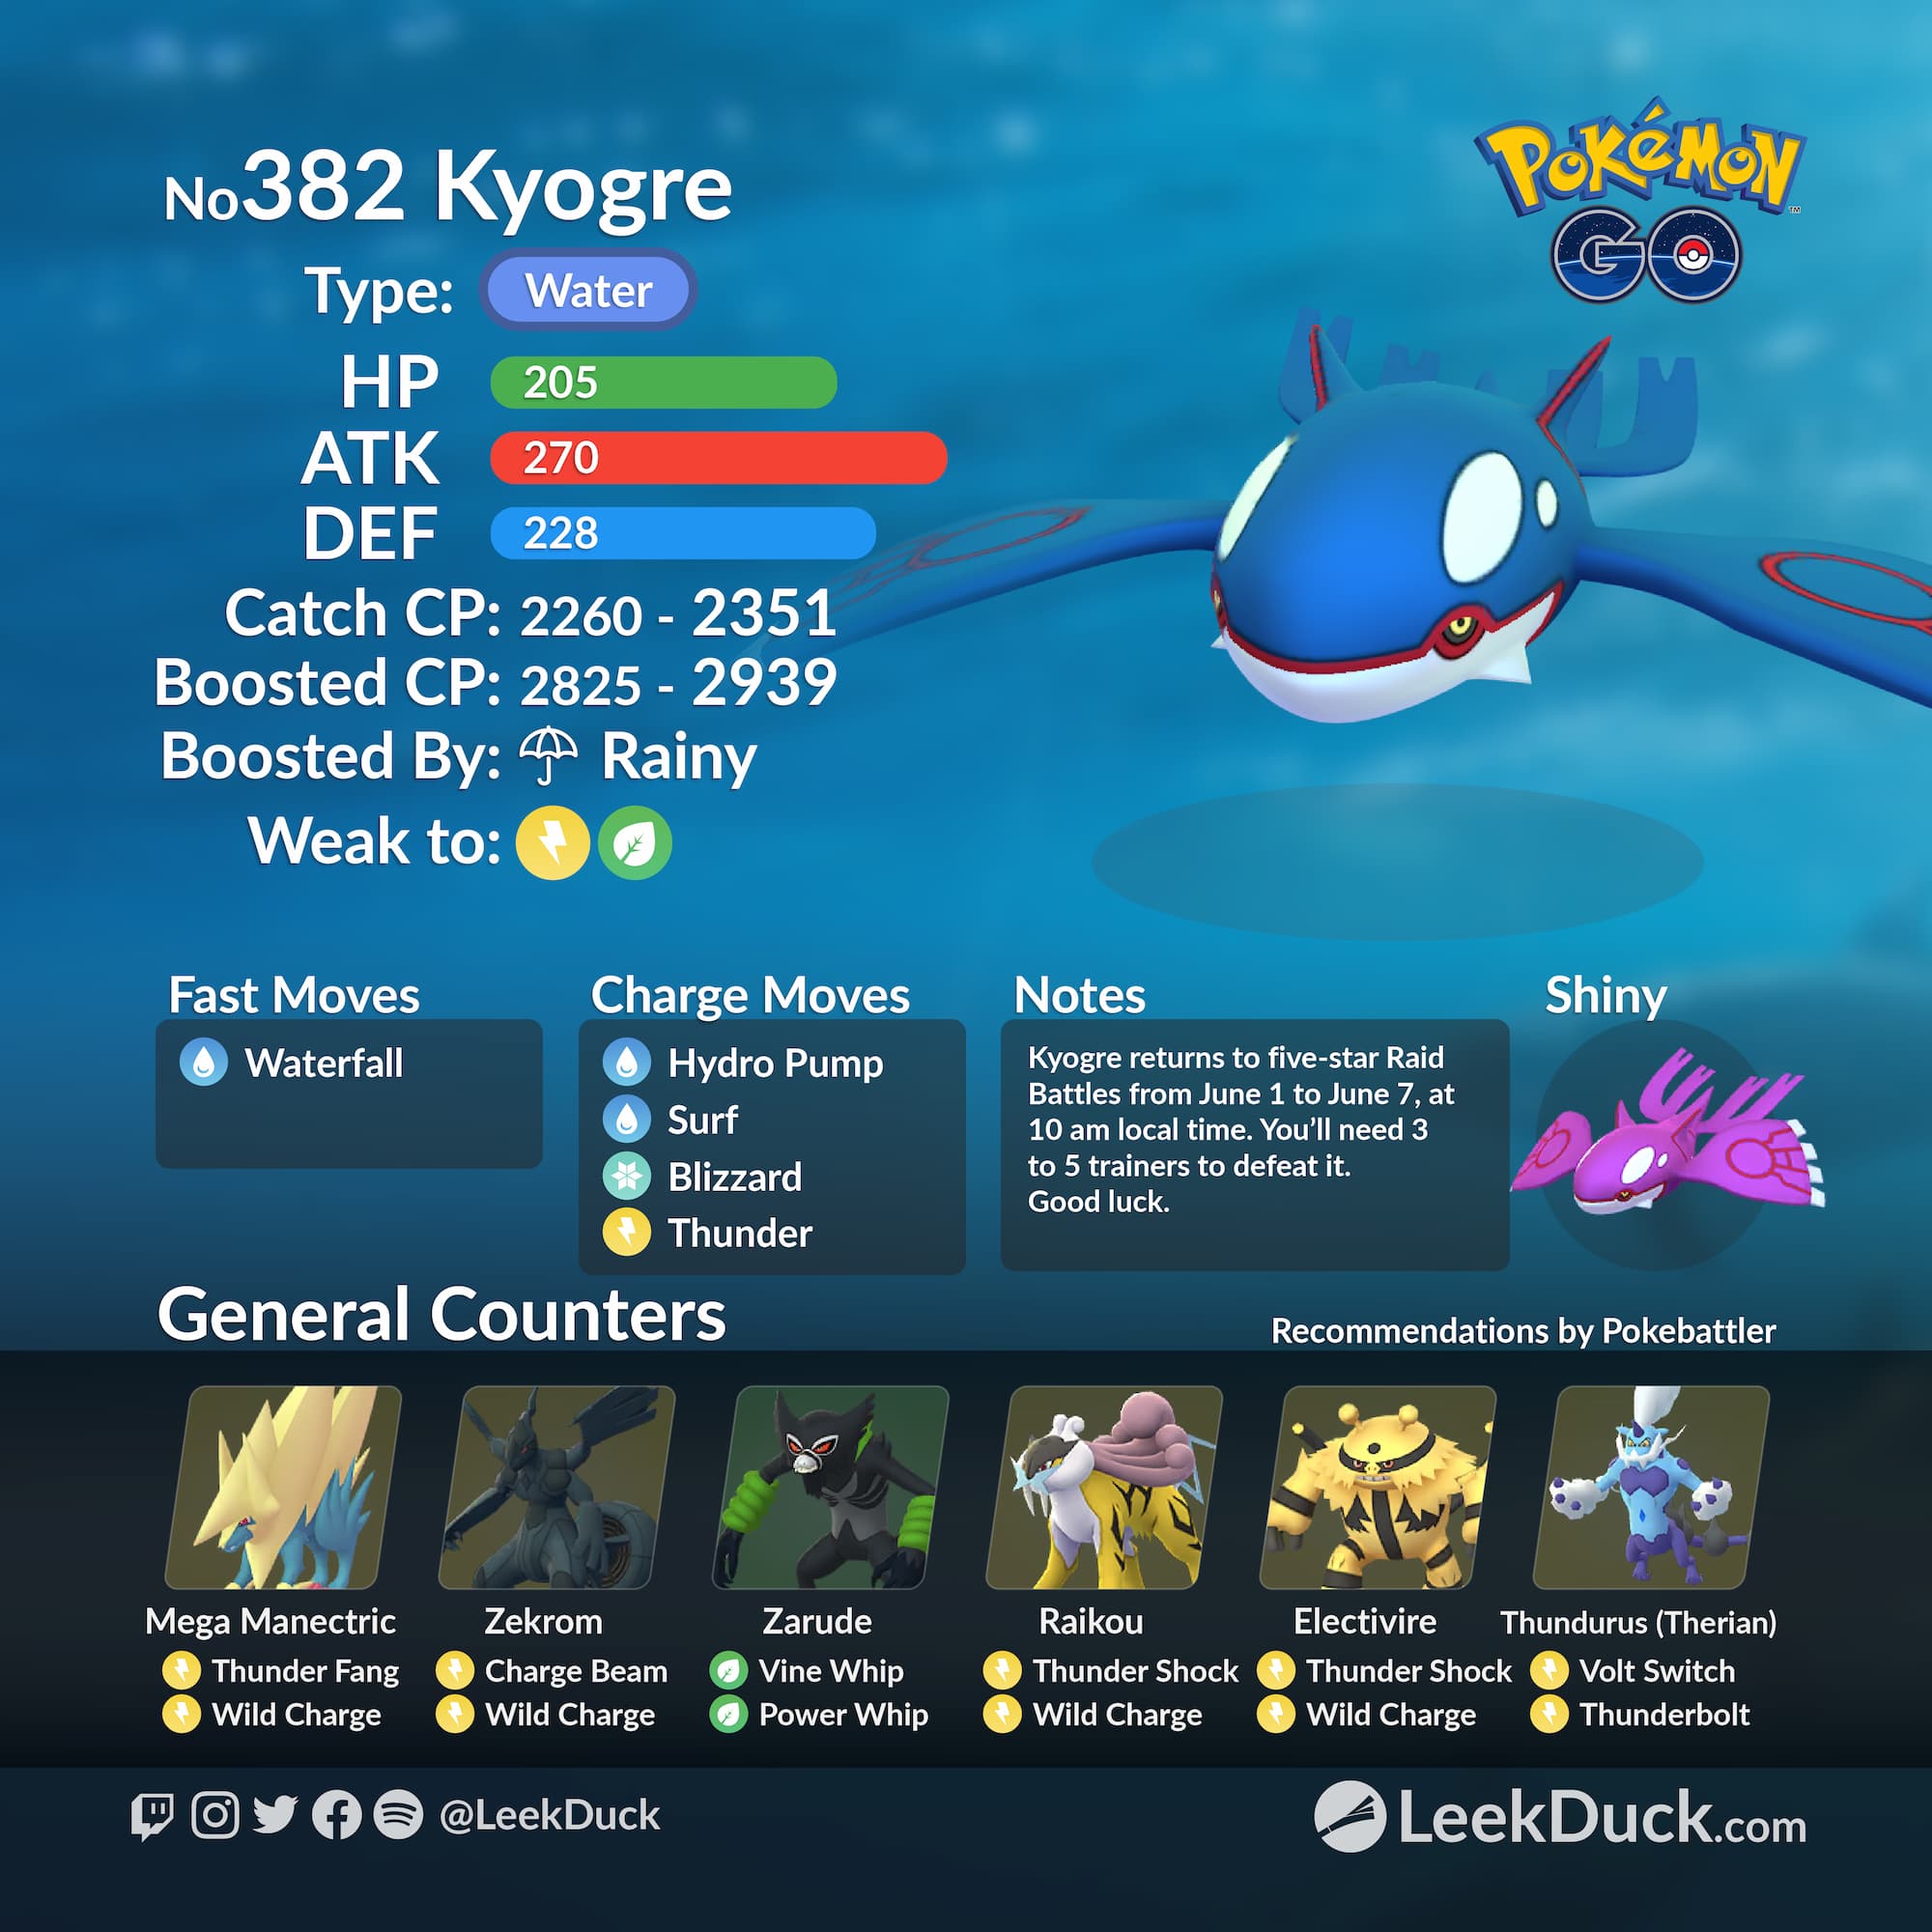 Kyogre in 5star Raid Battles Leek Duck Pokémon GO News and Resources